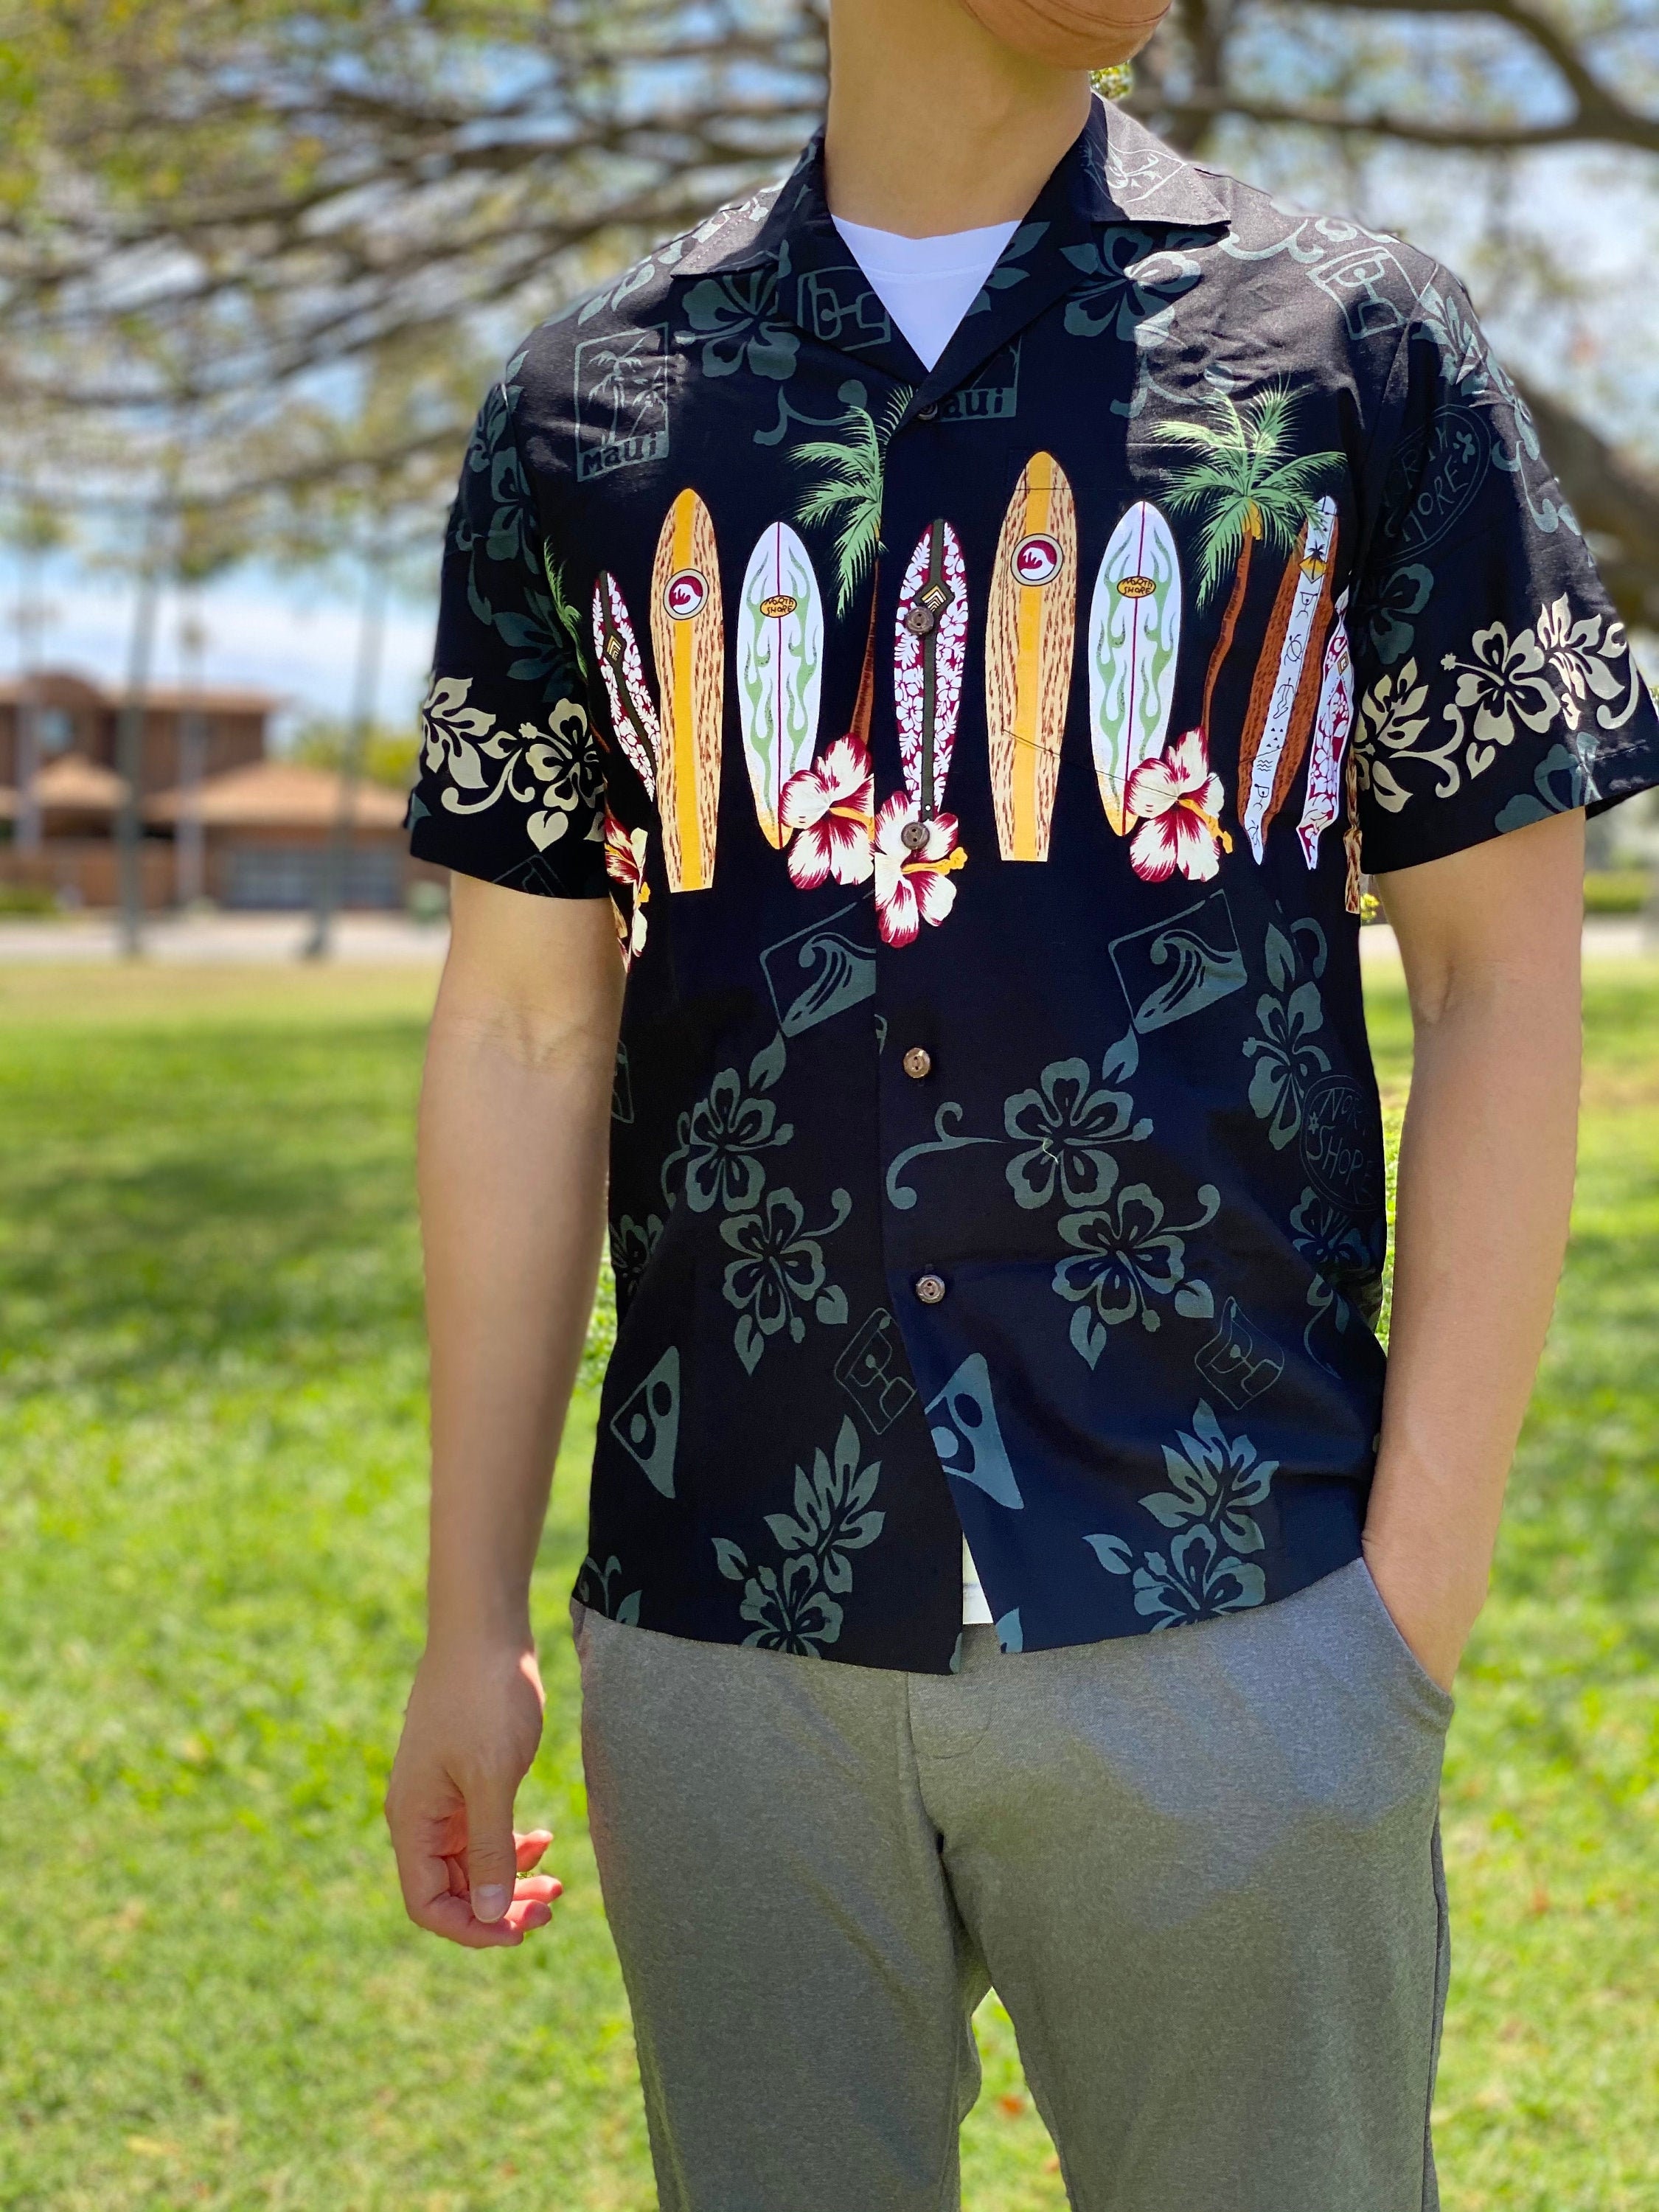 100% Cotton Maui Surfboard Hawaiian Aloha Shirt - Made in Hawaii - Small to 5XL,6XL,7XL - Bulk Quantities - Coconut Buttons